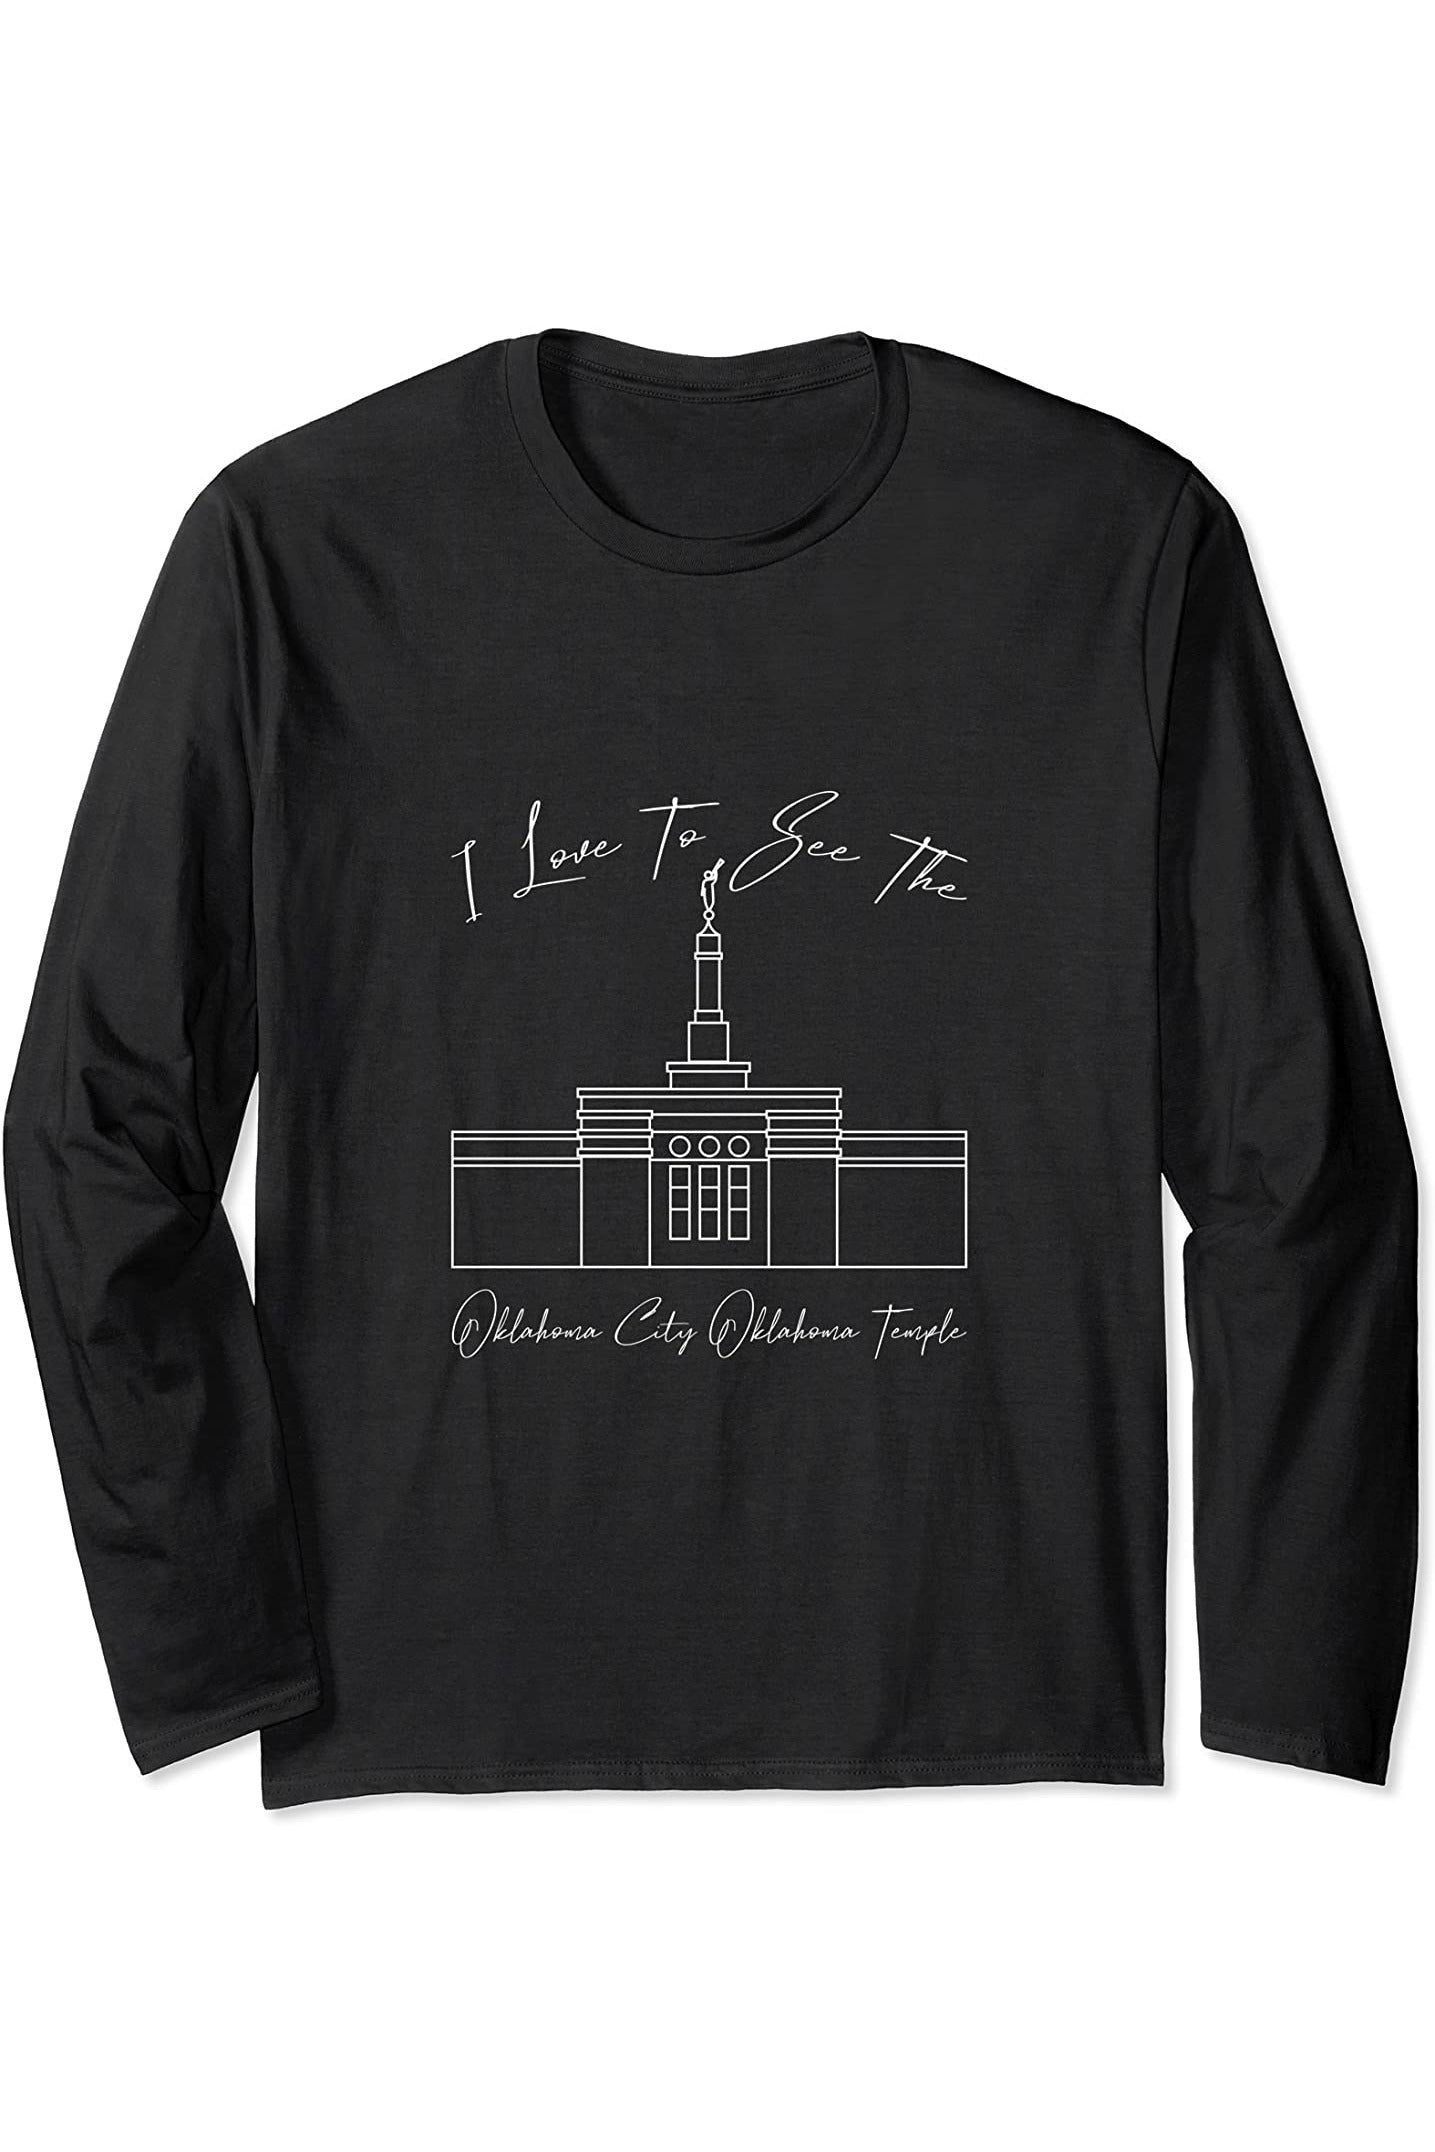 Oklahoma City Oklahoma Temple Long Sleeve T-Shirt - Calligraphy Style (English) US